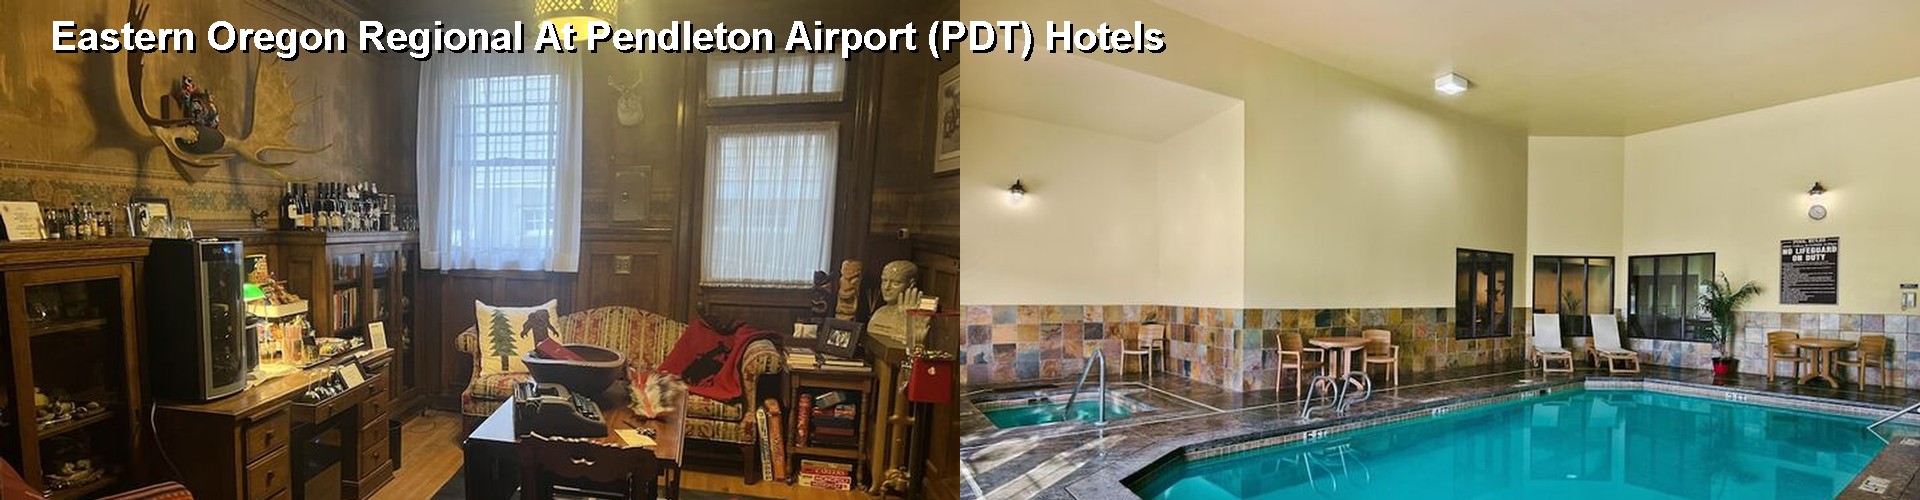 5 Best Hotels near Eastern Oregon Regional At Pendleton Airport (PDT)